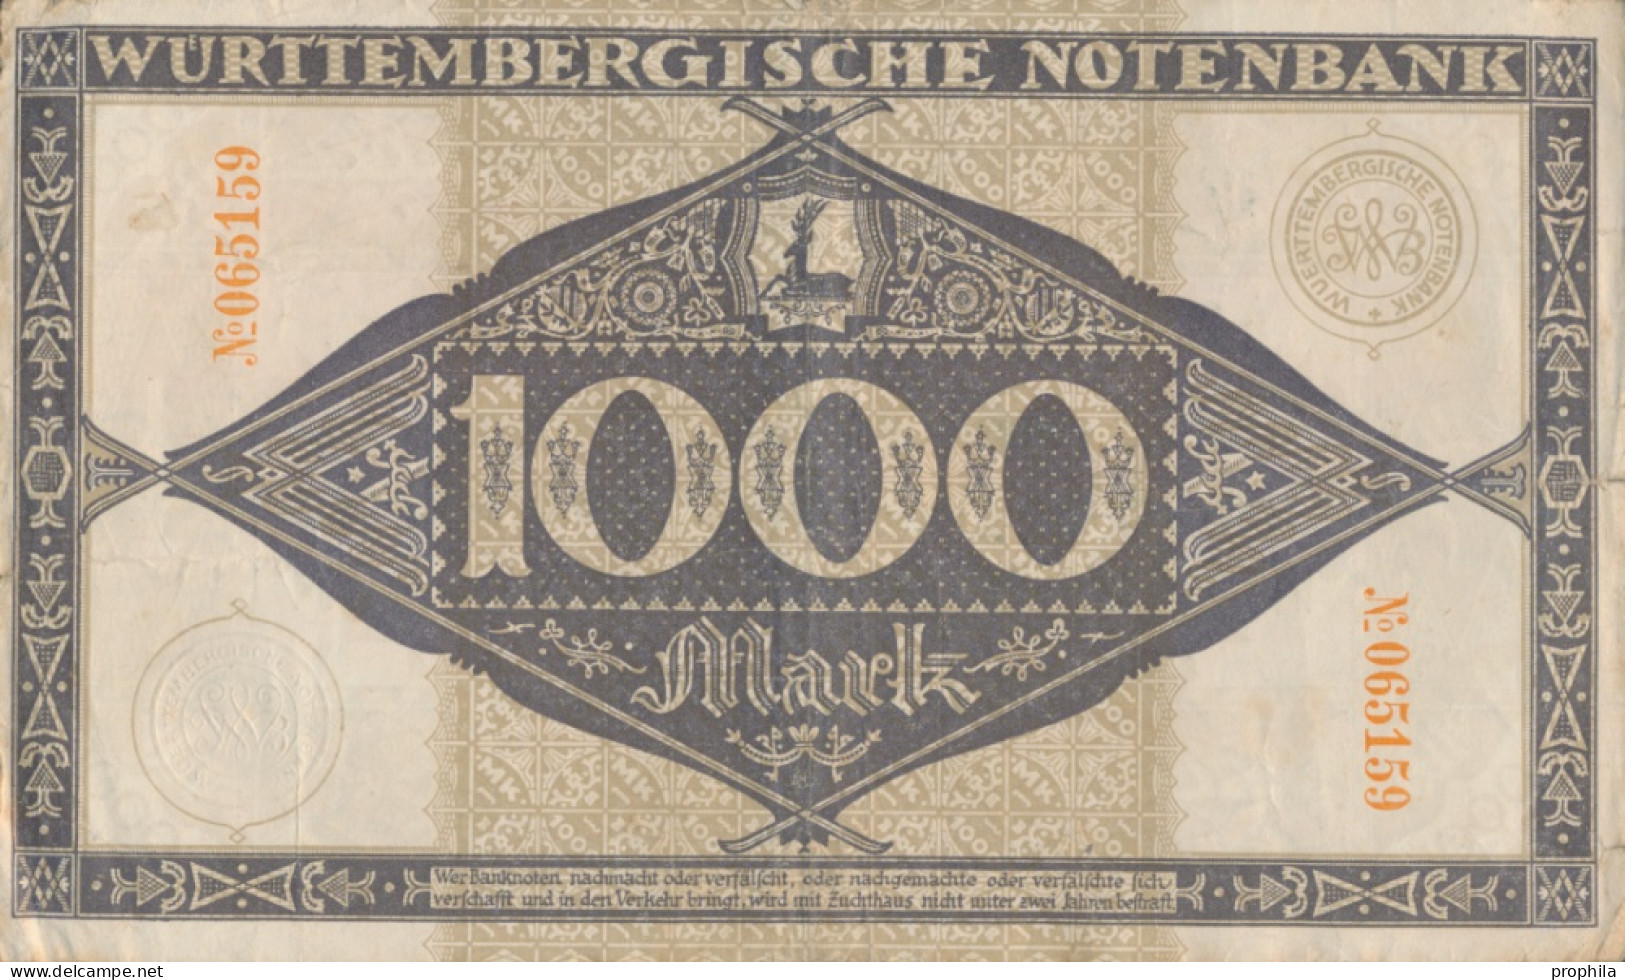 Württemberg Rosenbg: WTB12a Länderbanknote Württemberg, Vs. Mit Handunterschrift Stark Gebraucht (IV) 1922  (10288530 - 1.000 Mark